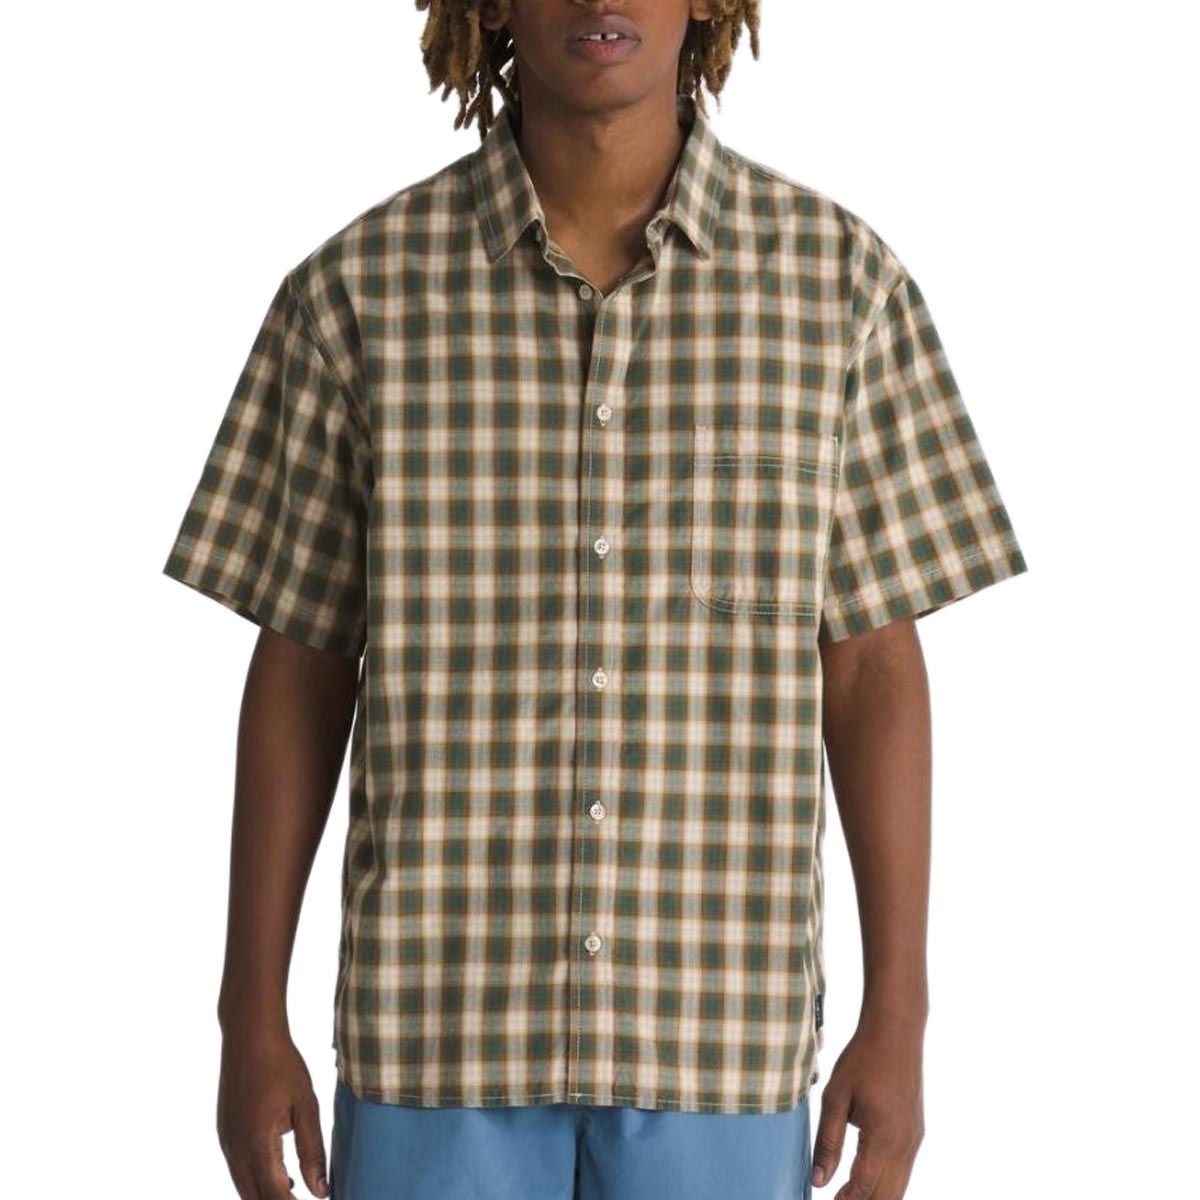 Vans Hadley Woven Shirt - Oatmeal/bistro Green image 1